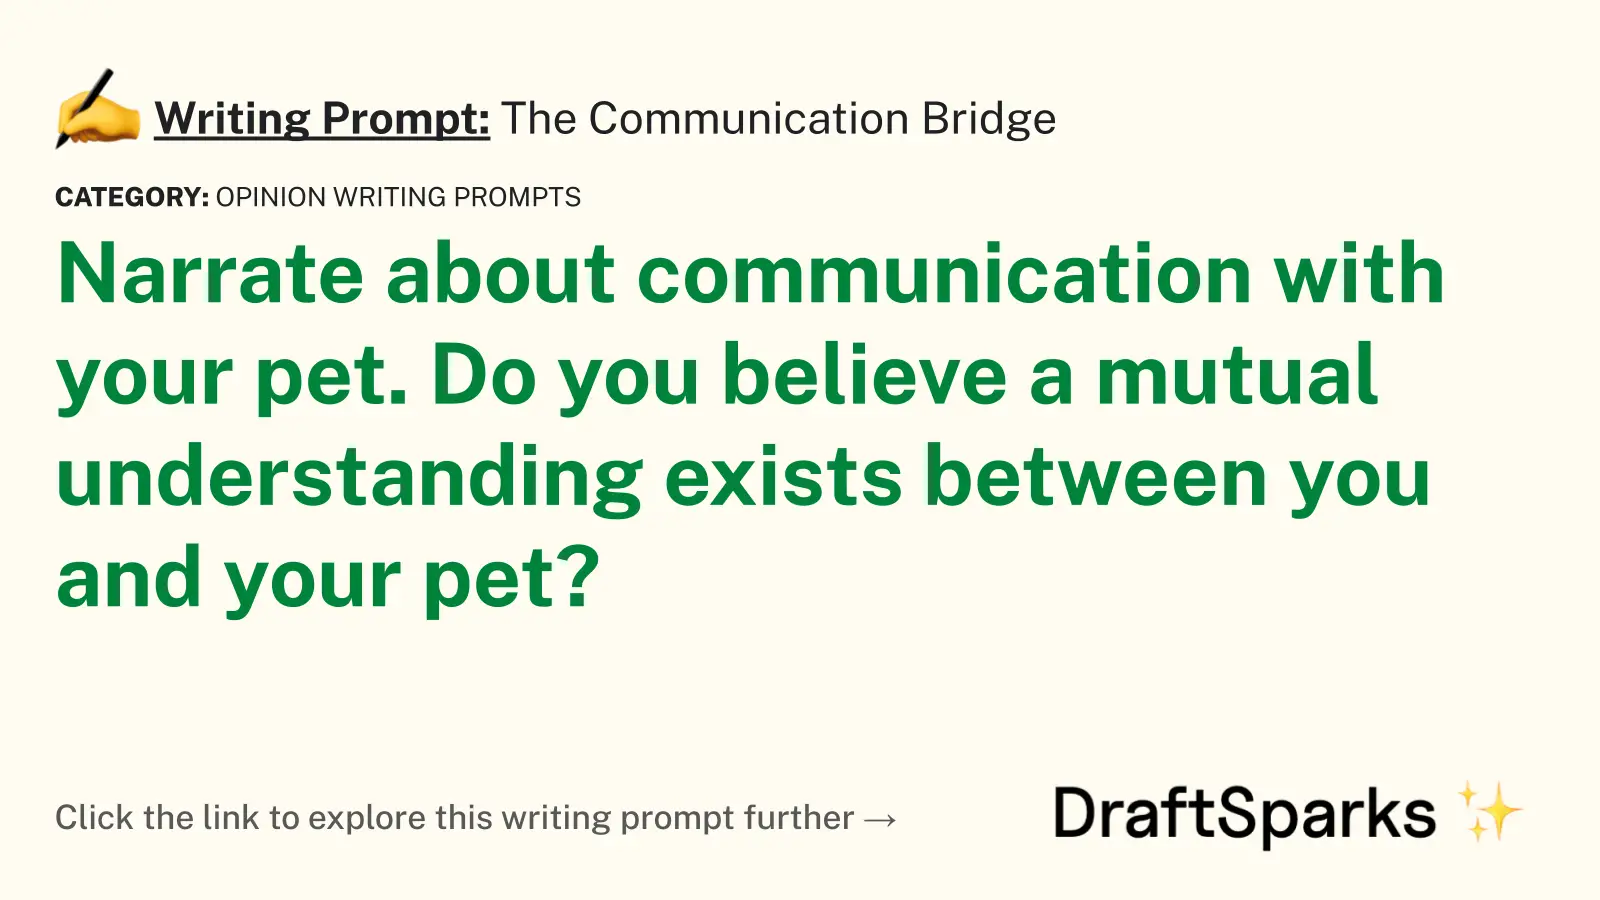 The Communication Bridge